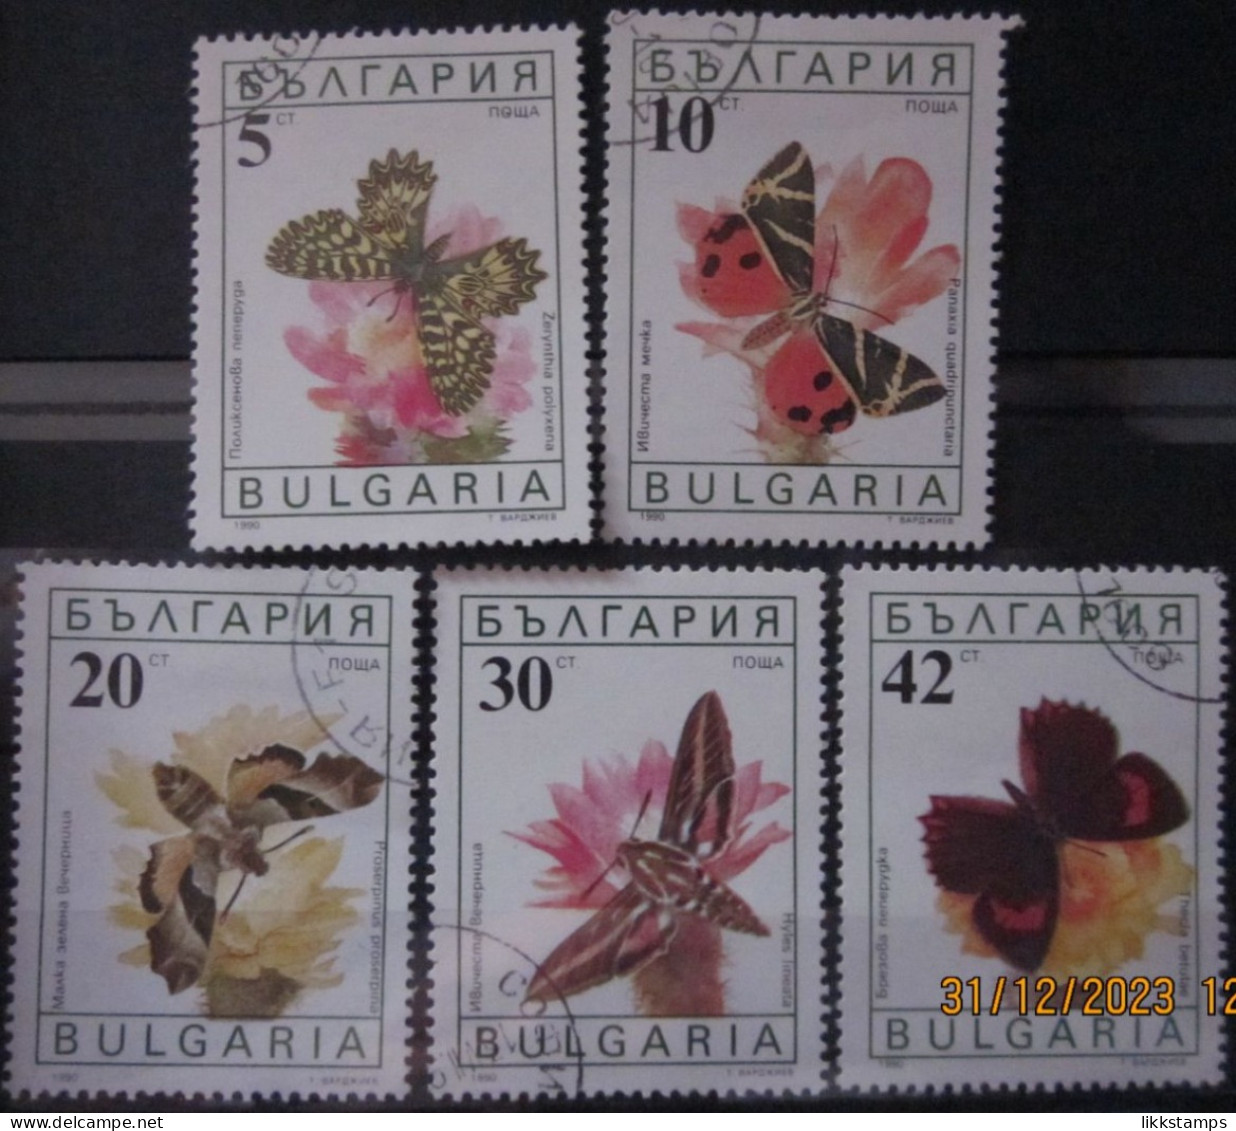 BULGARIA 1990 ~ S.G. 3699 - 3703, ~ BUTTERFLIES AND MOTHS. ~  VFU #02913 - Usados